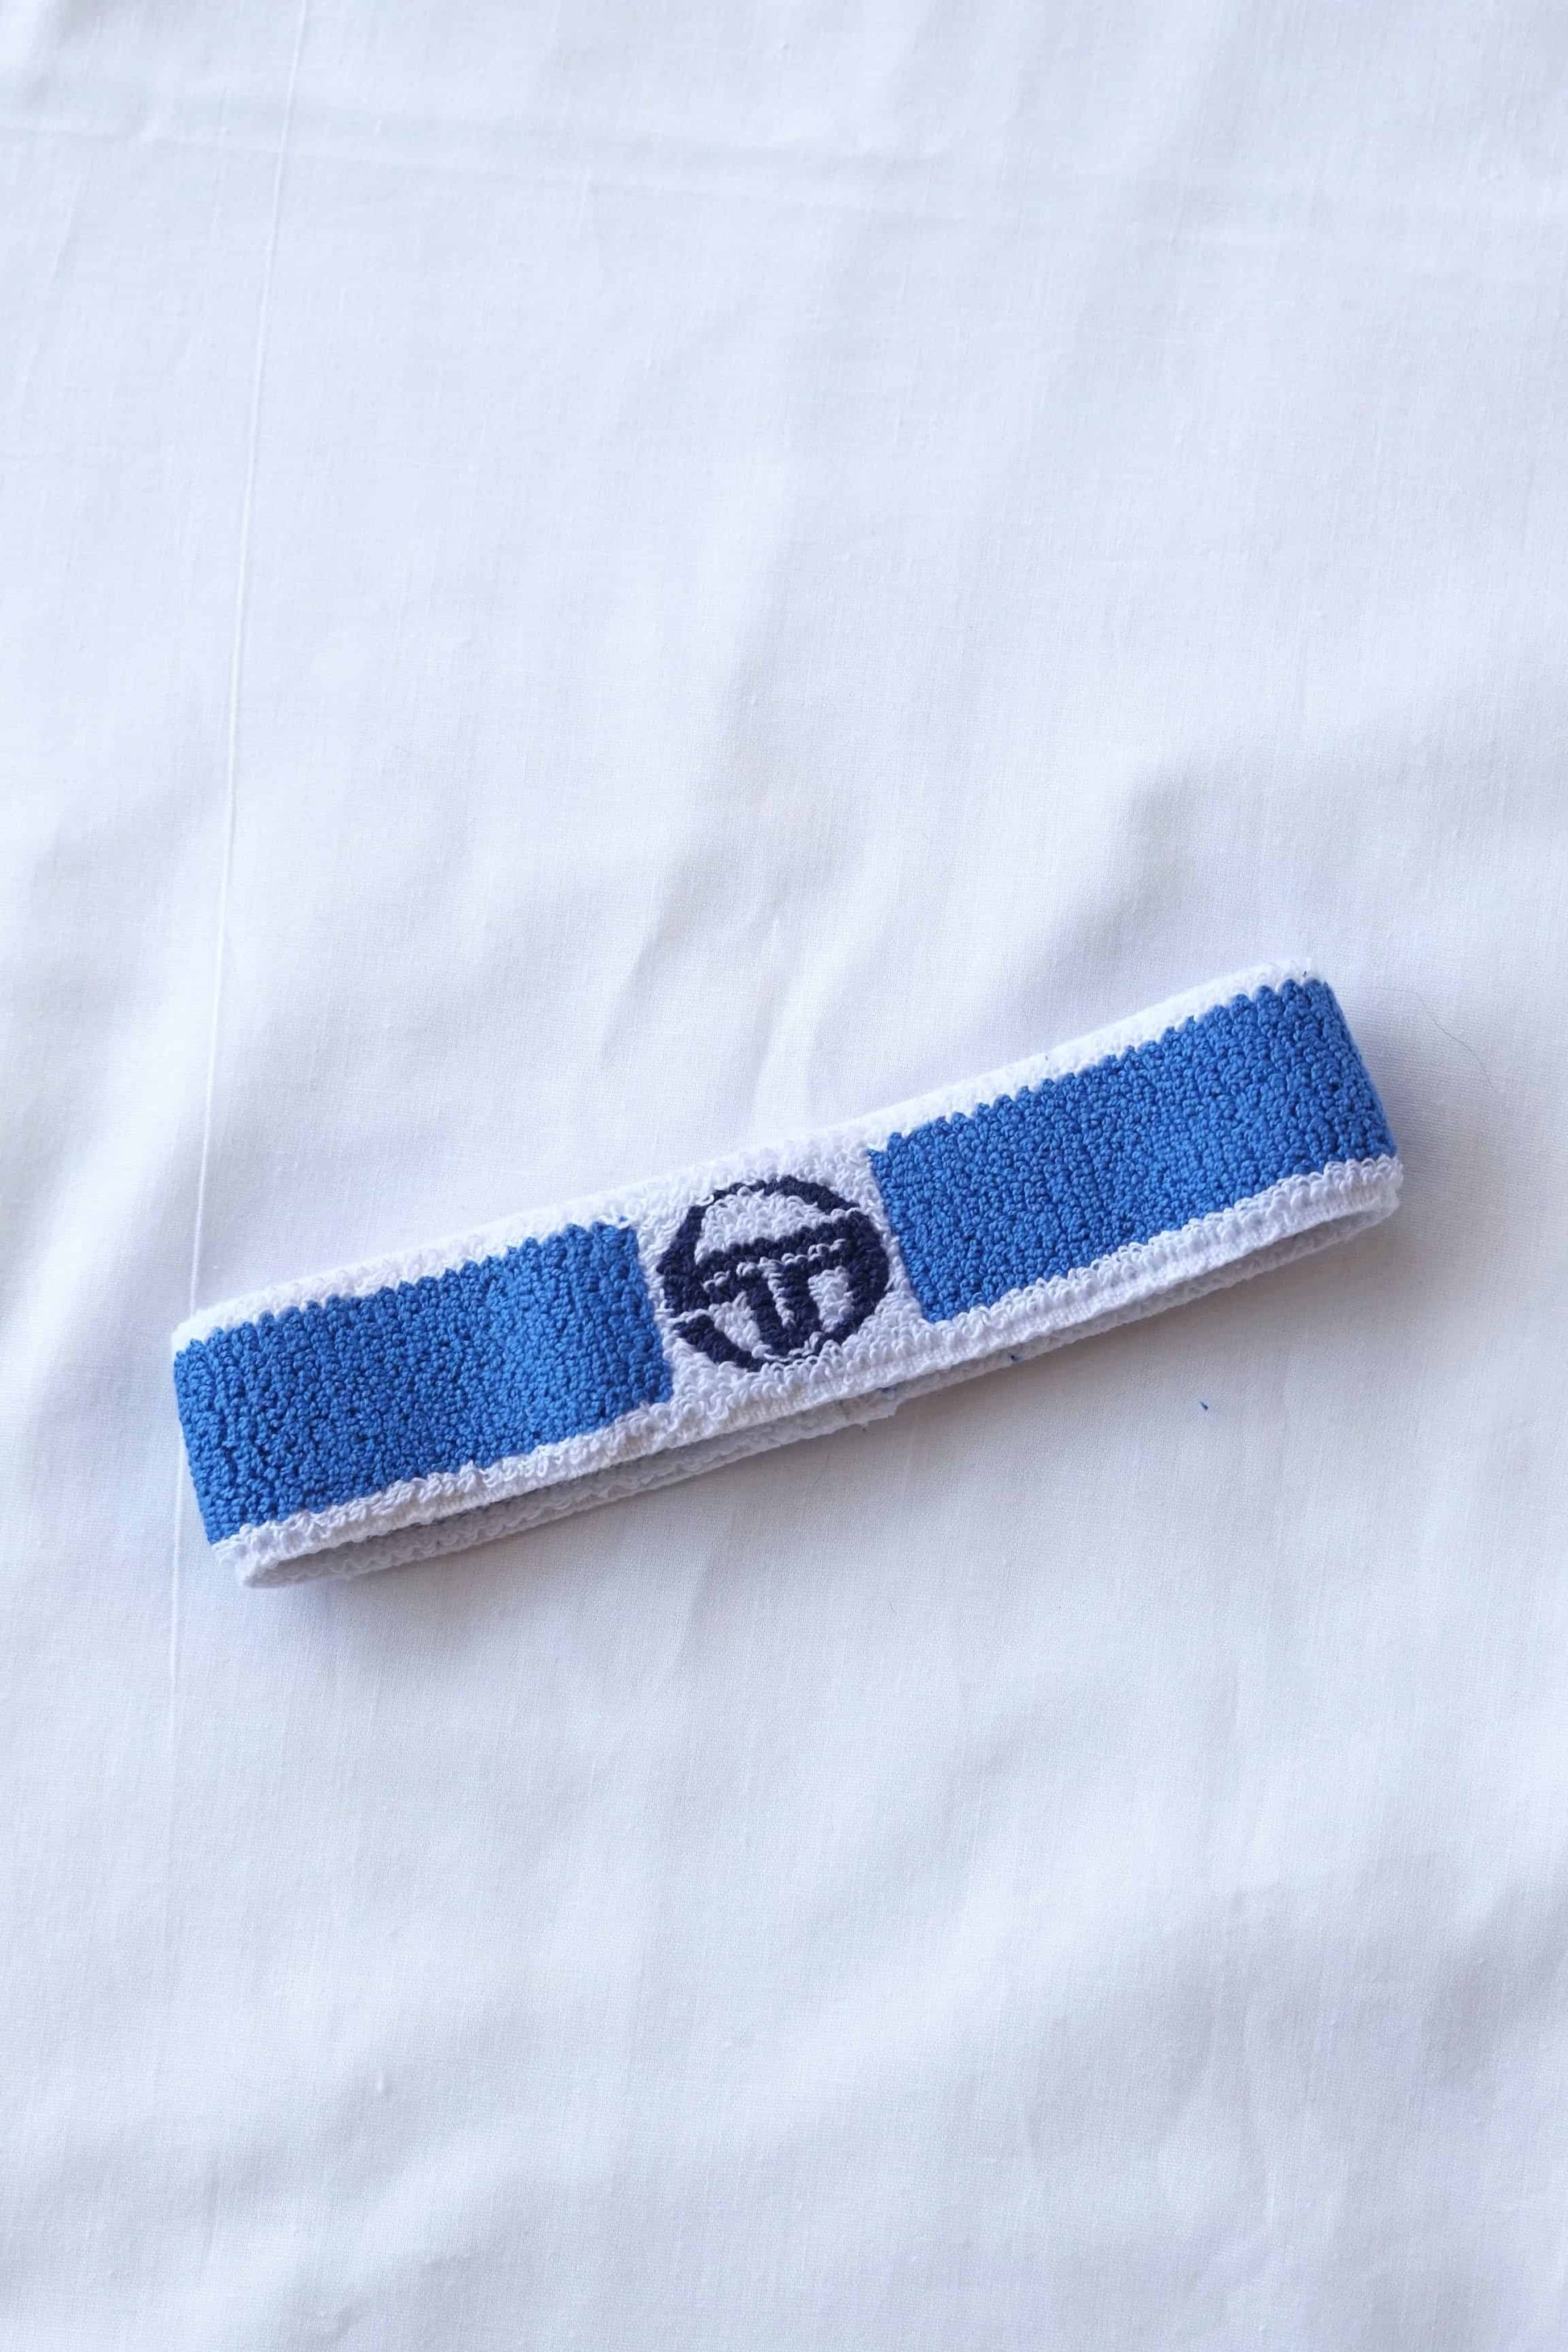 Vintage Sergio Tacchini Headband white and blue